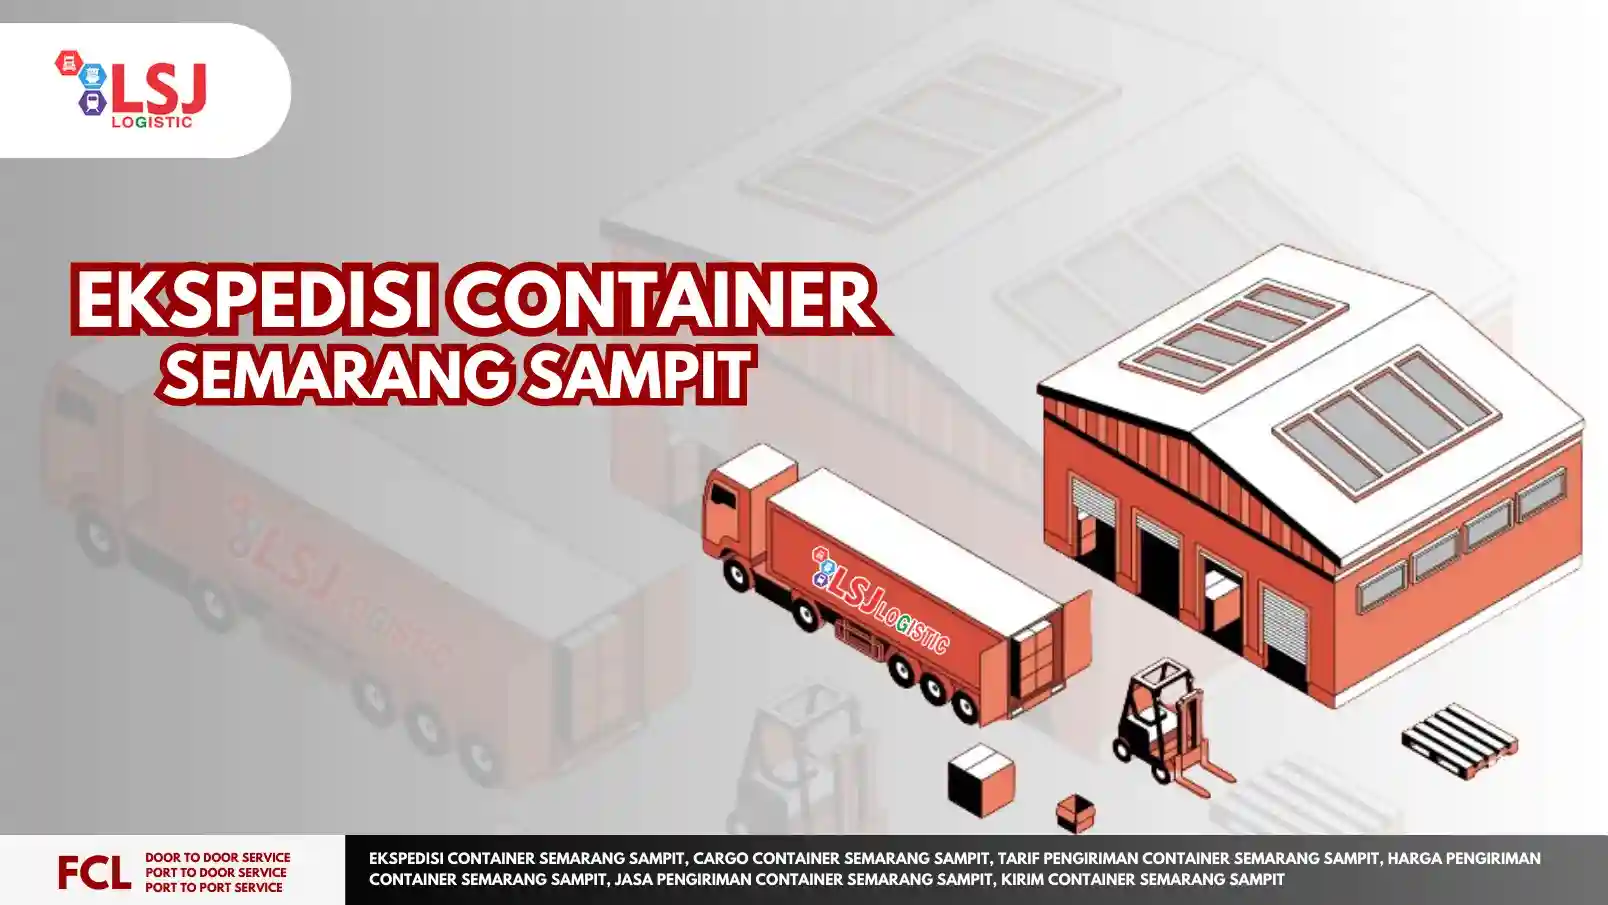 Ekspedisi Container Semarang Sampit